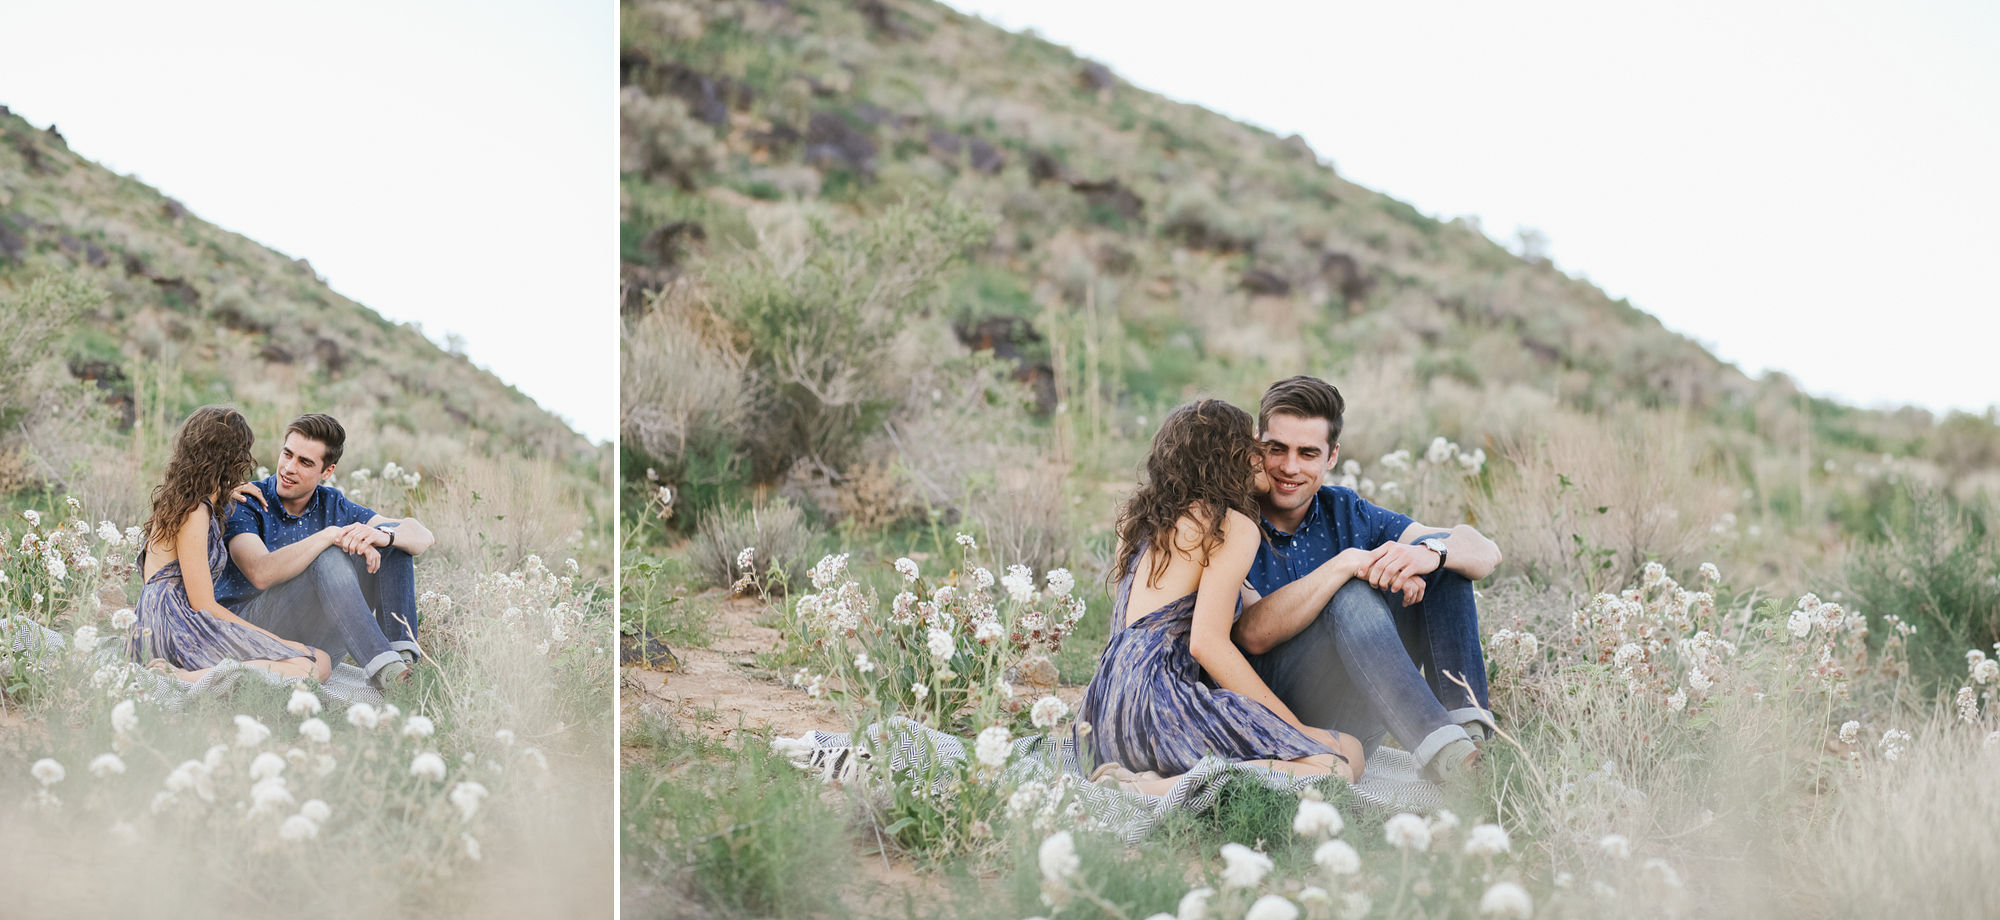 Jordan and Riley on the desert hillside at their engagement session. 